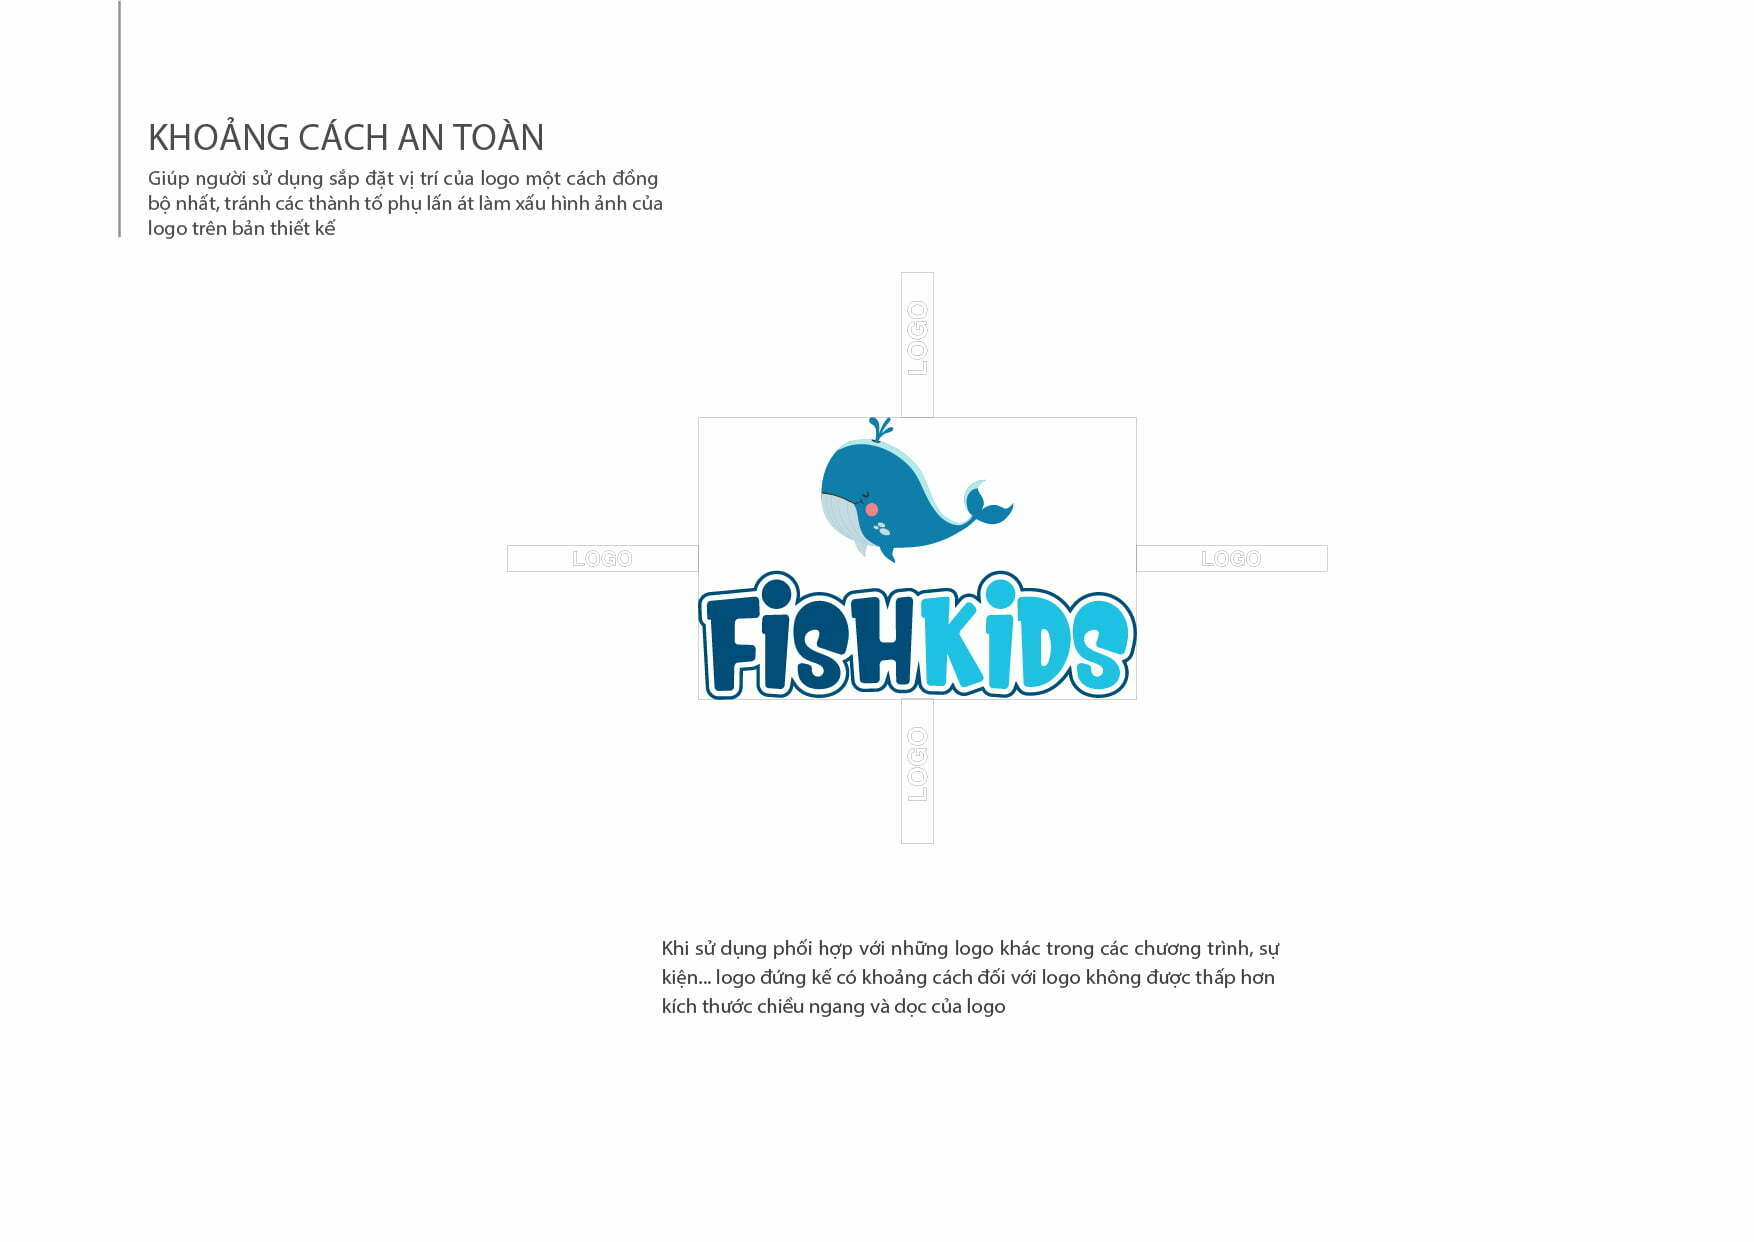 Fishkids Quy chuan logo Vesion 1 06